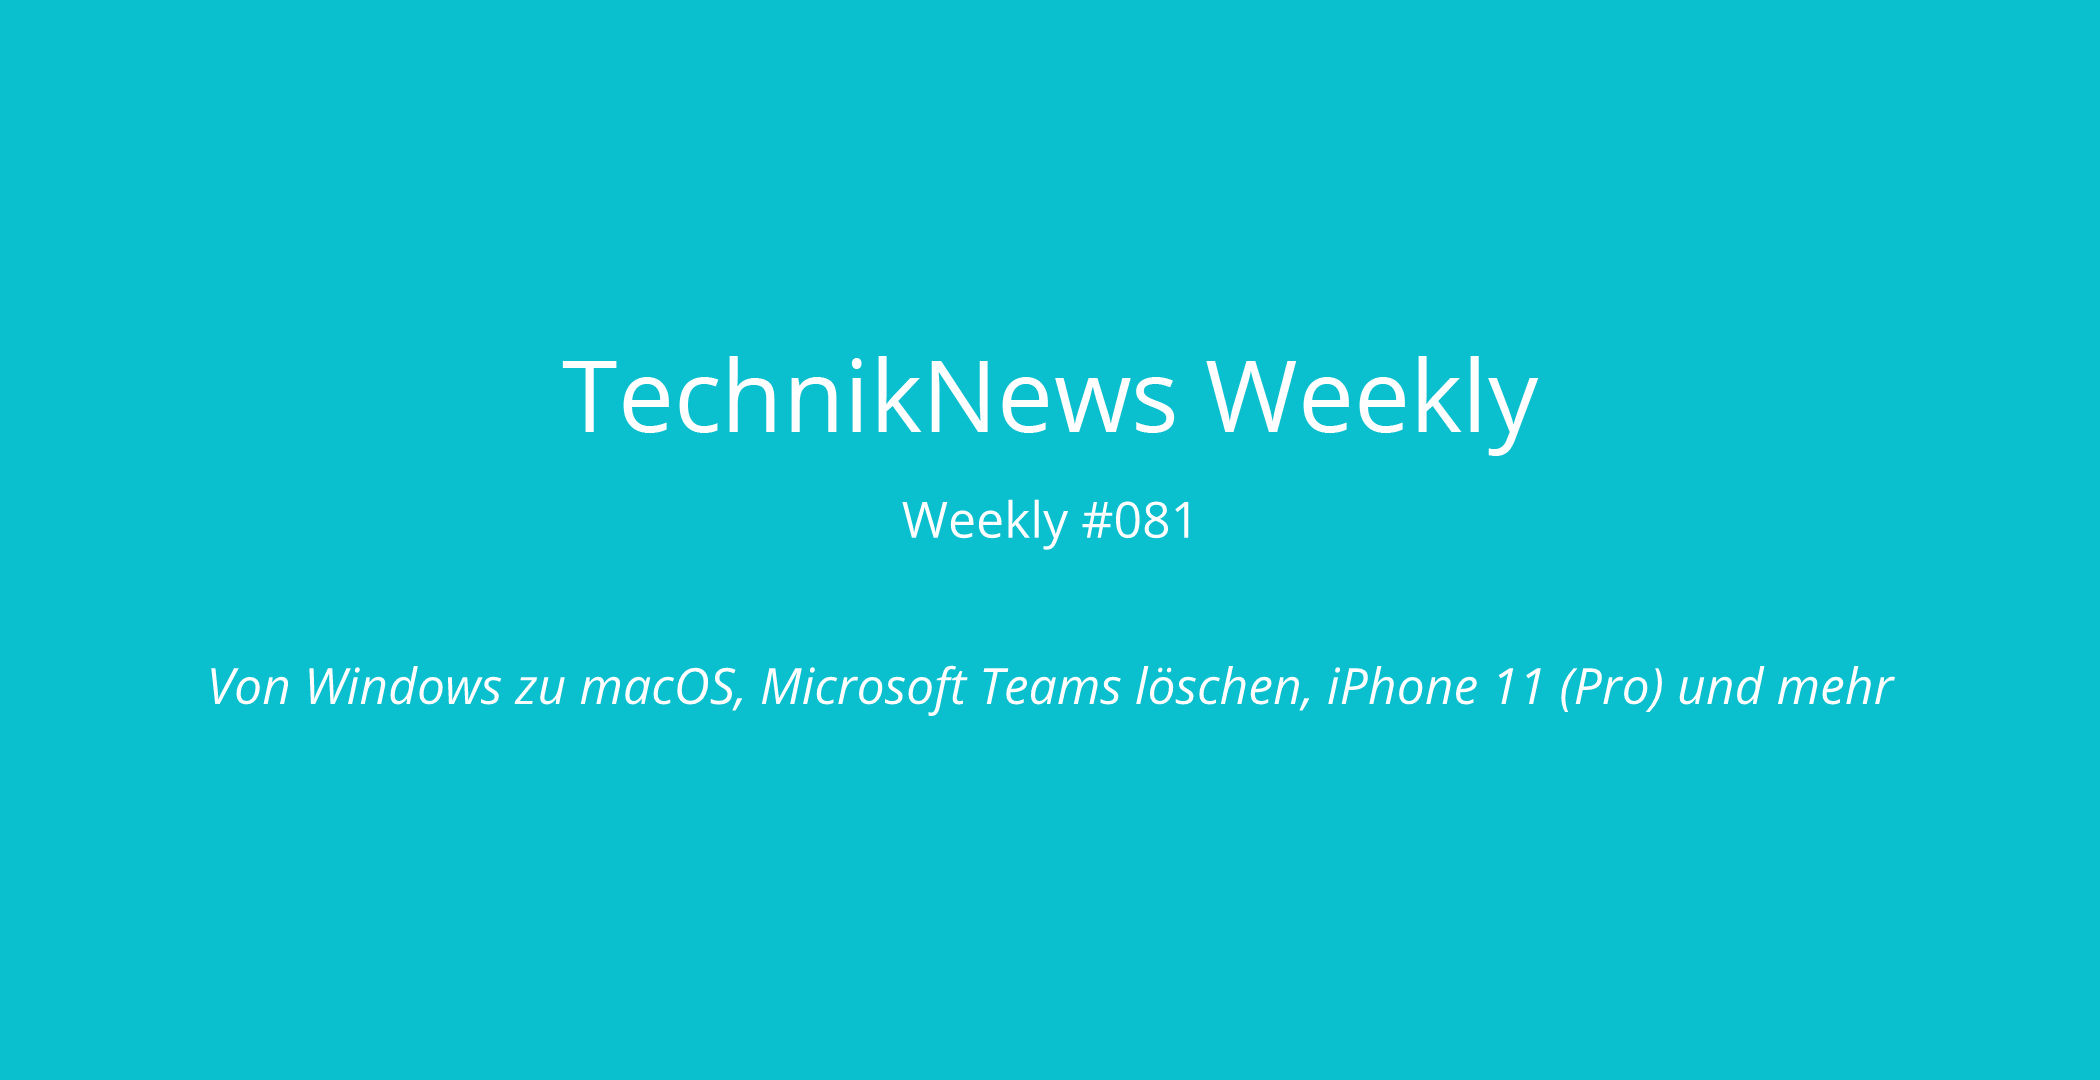 TechnikNews Weekly # 081